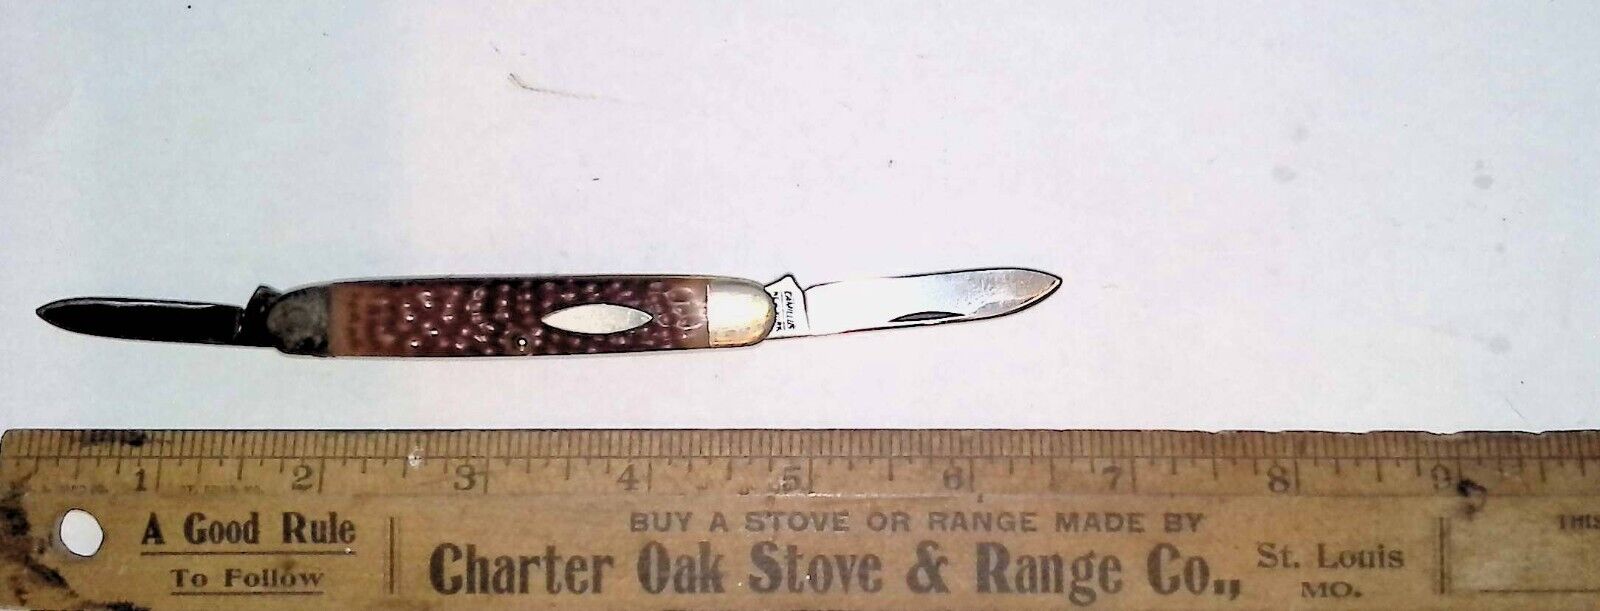 Camillus #41 Two Blade Pocket Knife